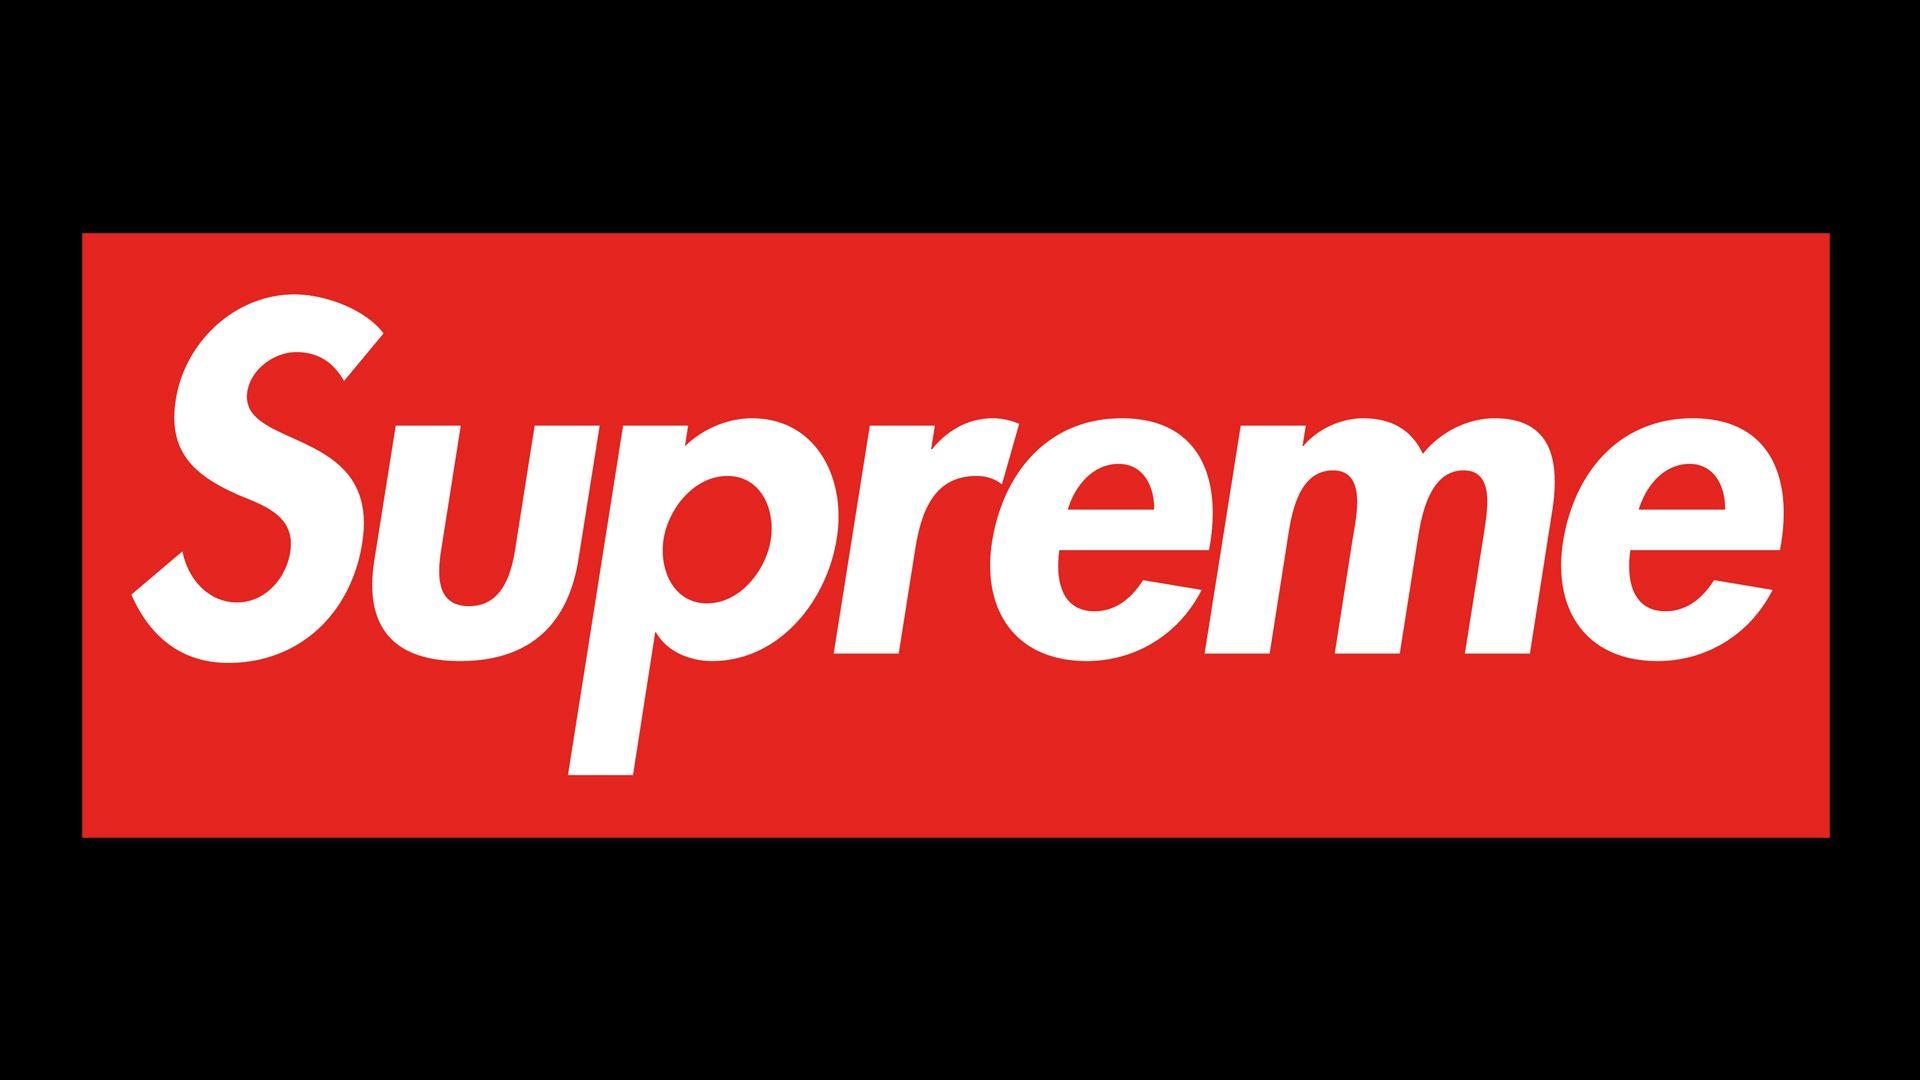 Supreme Logo - Supreme Logo, Supreme Symbol, Meaning, History and Evolution